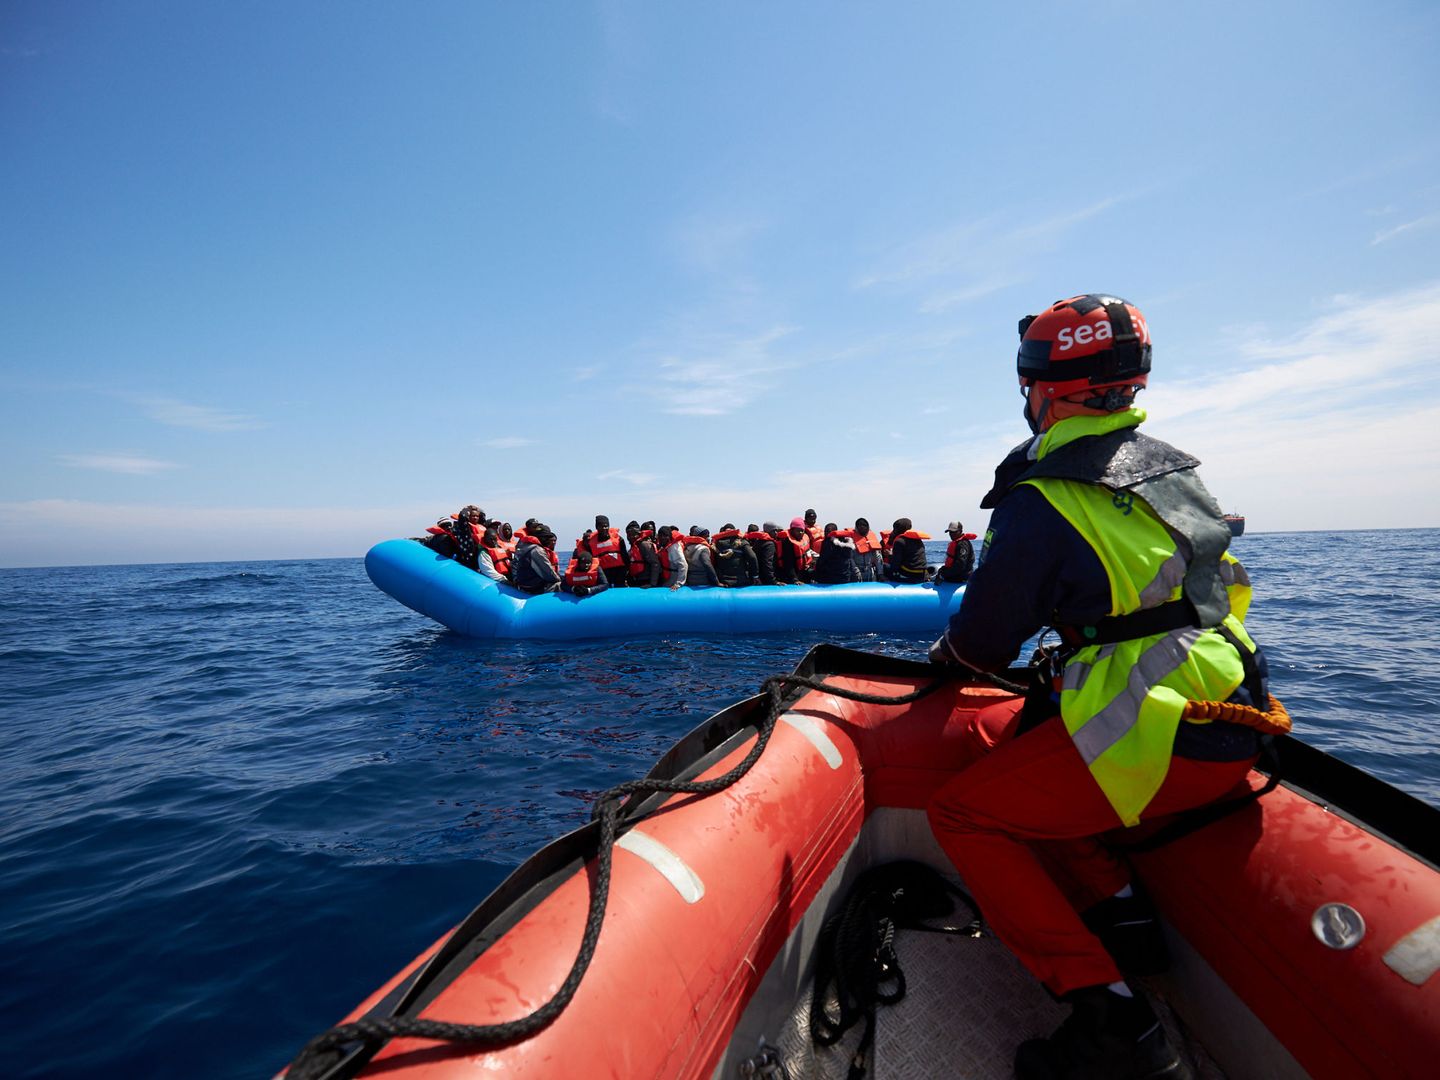 Rescate de migrantes en el Mediterráneo. (Reuters)